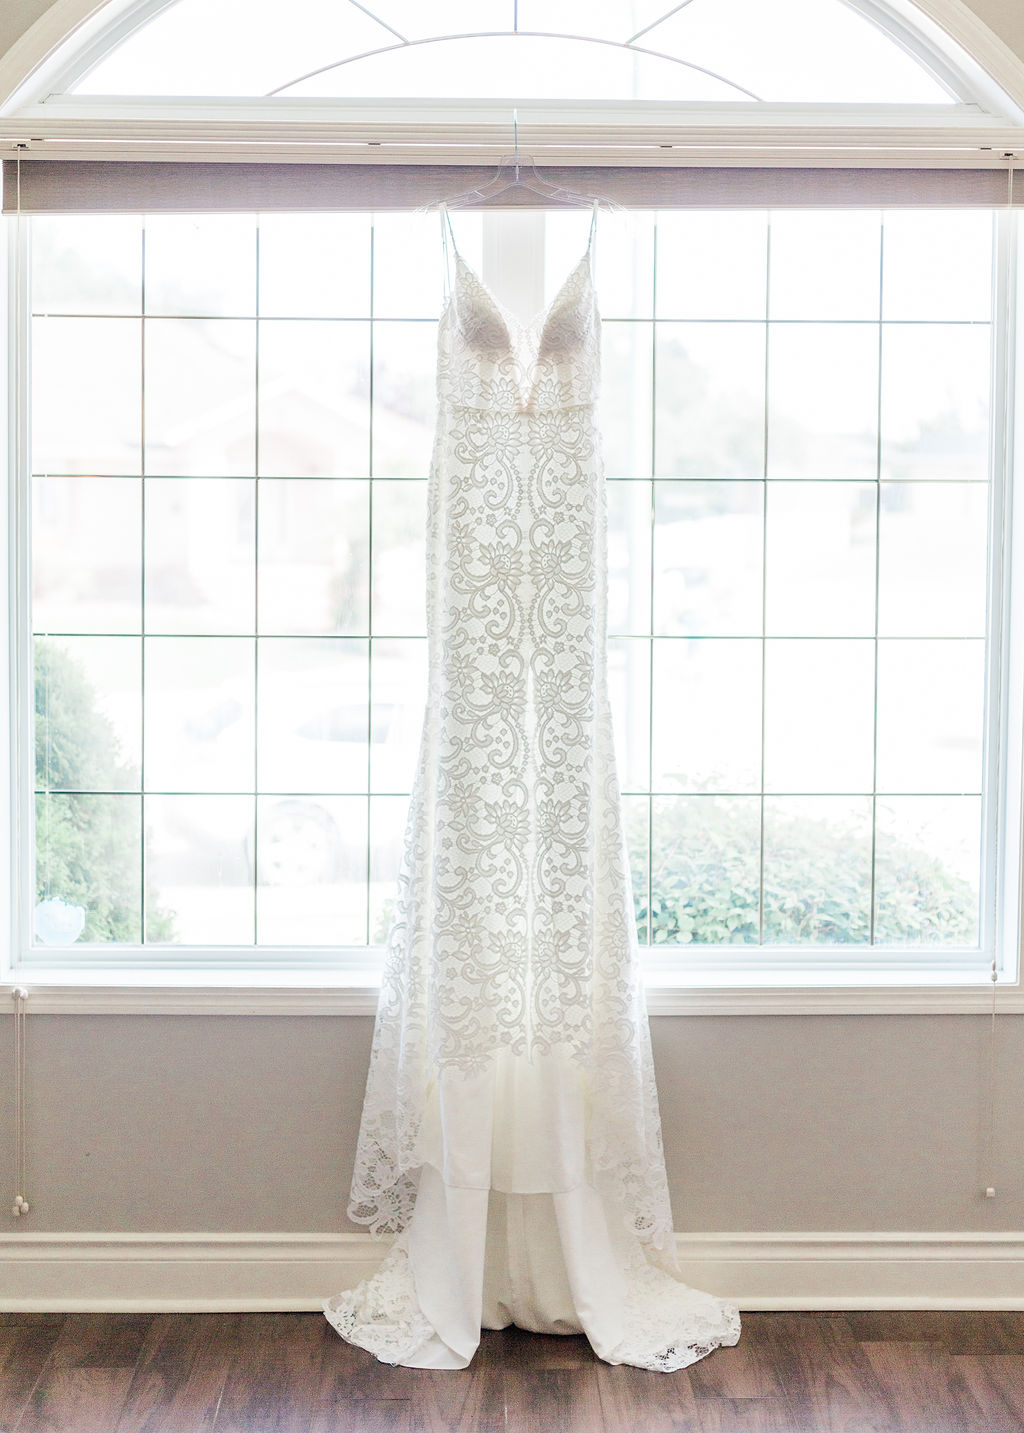 Lace wedding dress silhouette -  wedding dress